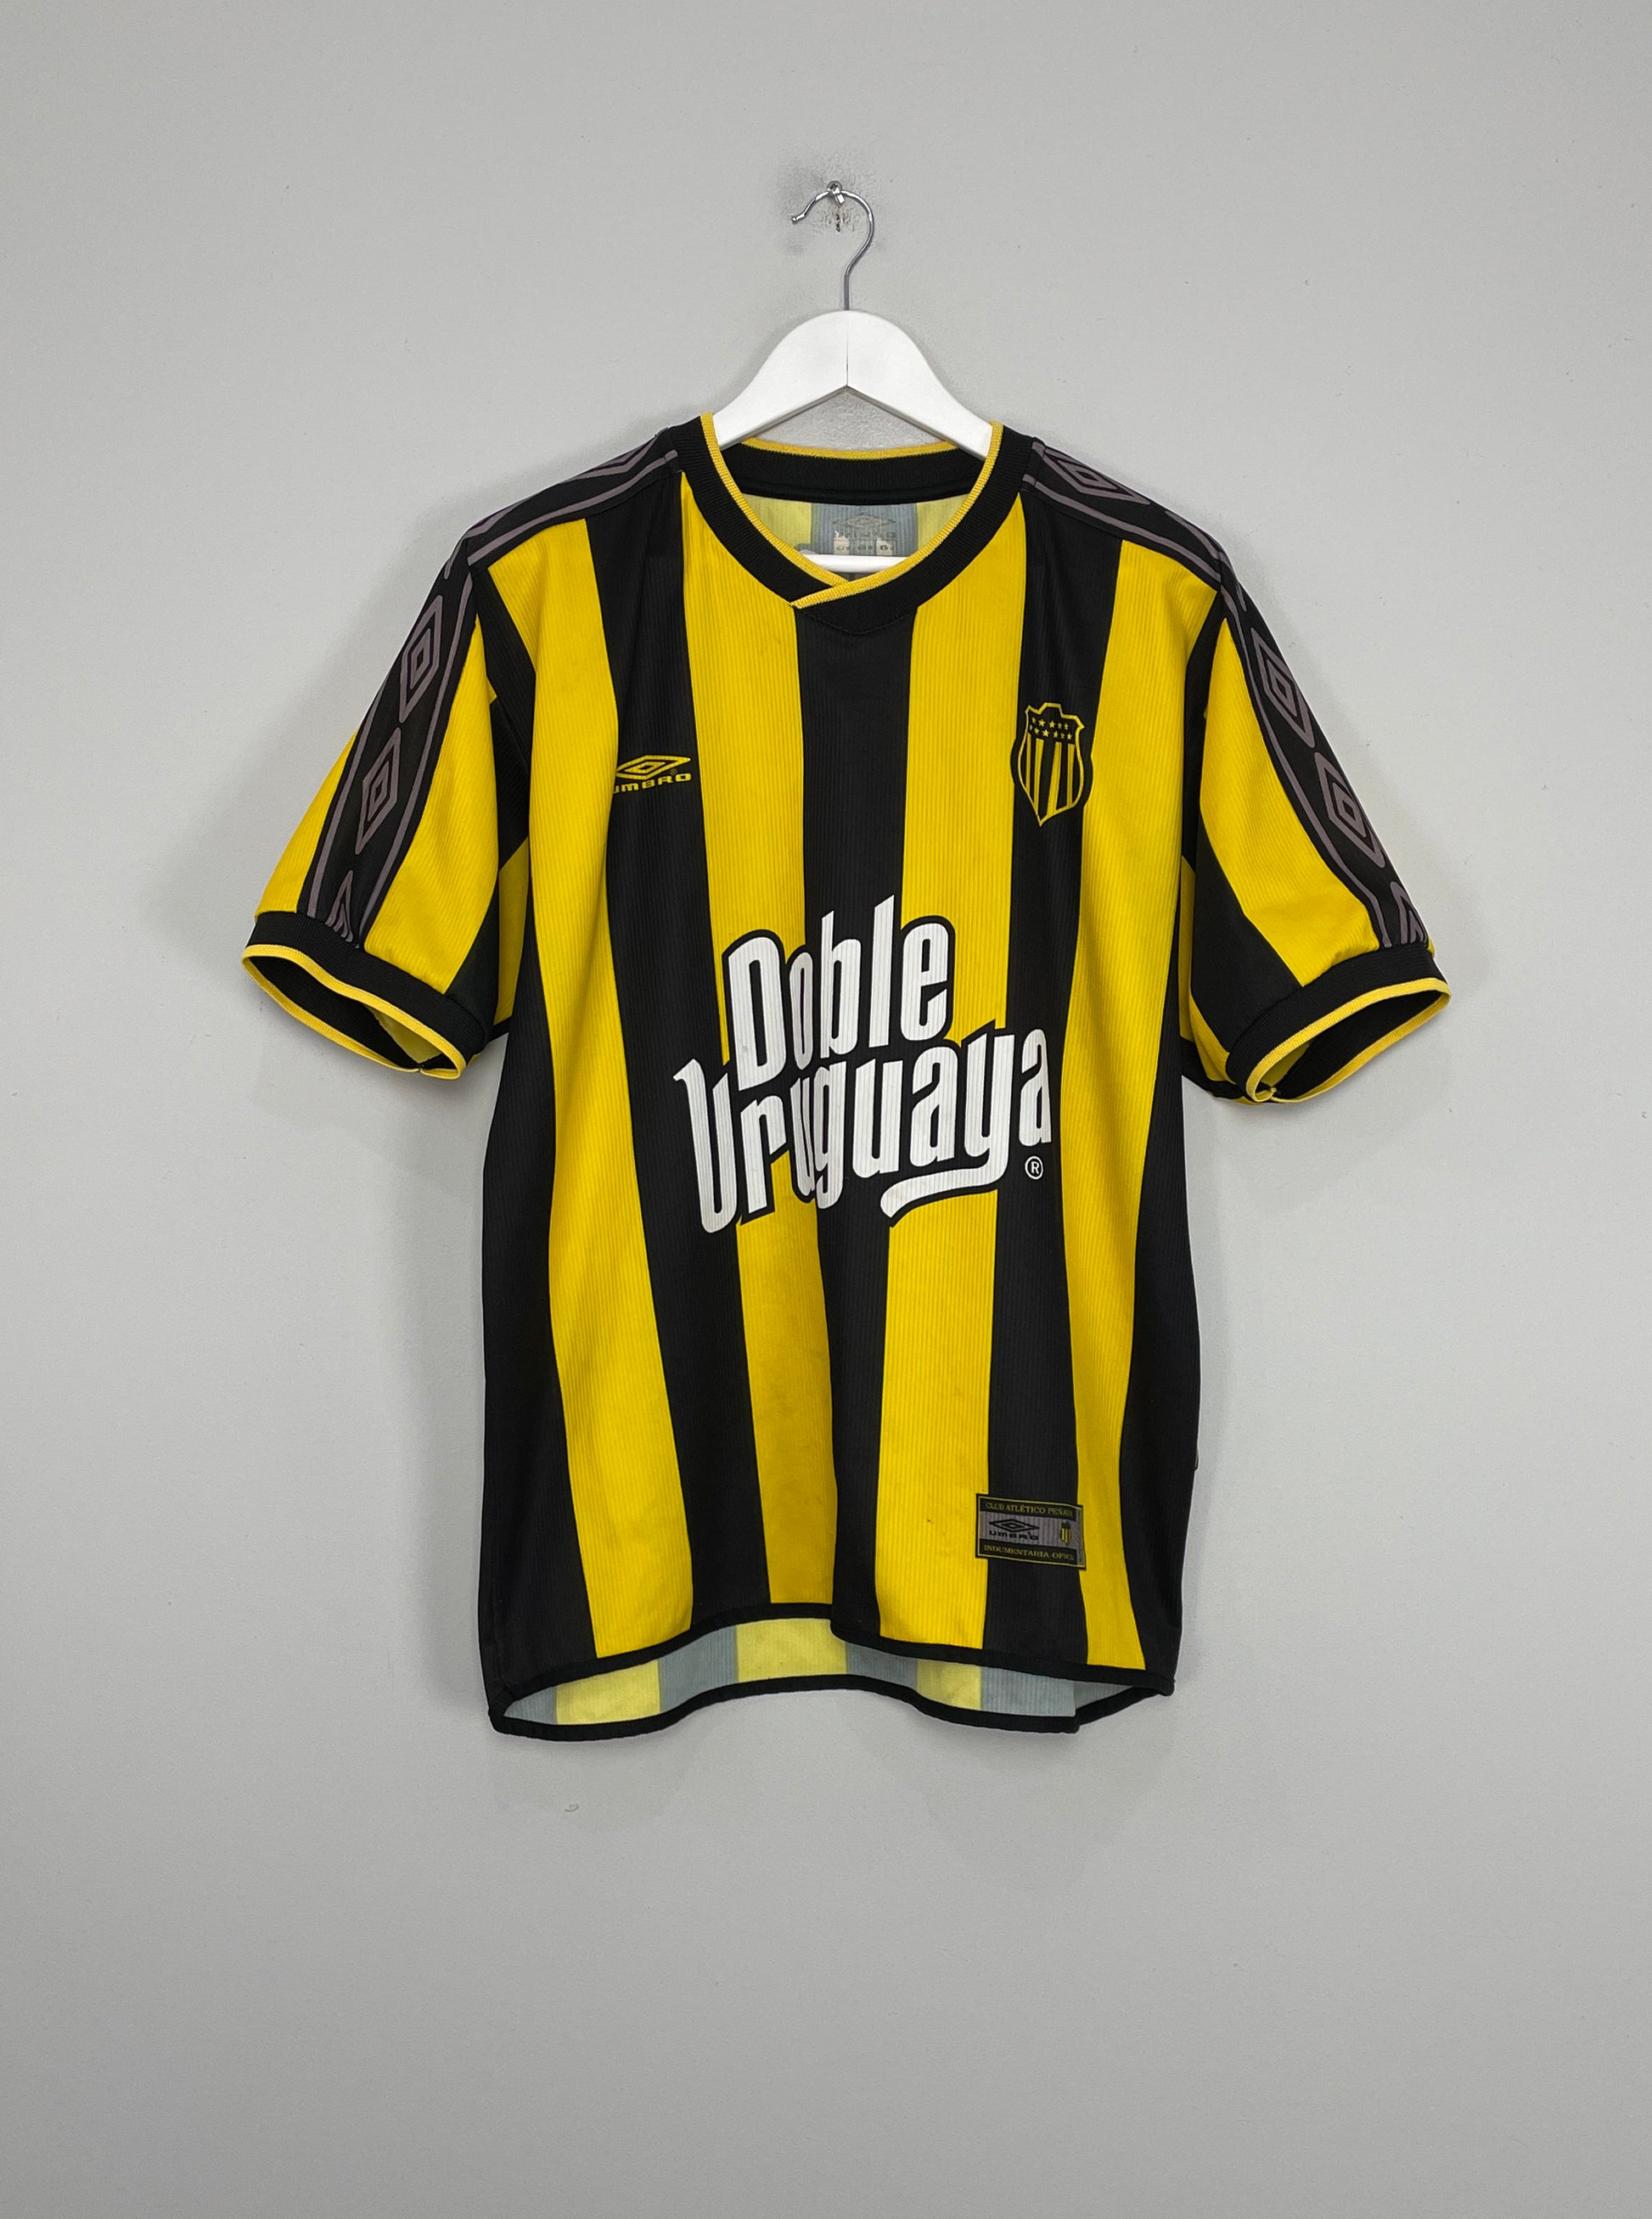 Image of the Penarol shirt from the 2002/03 season